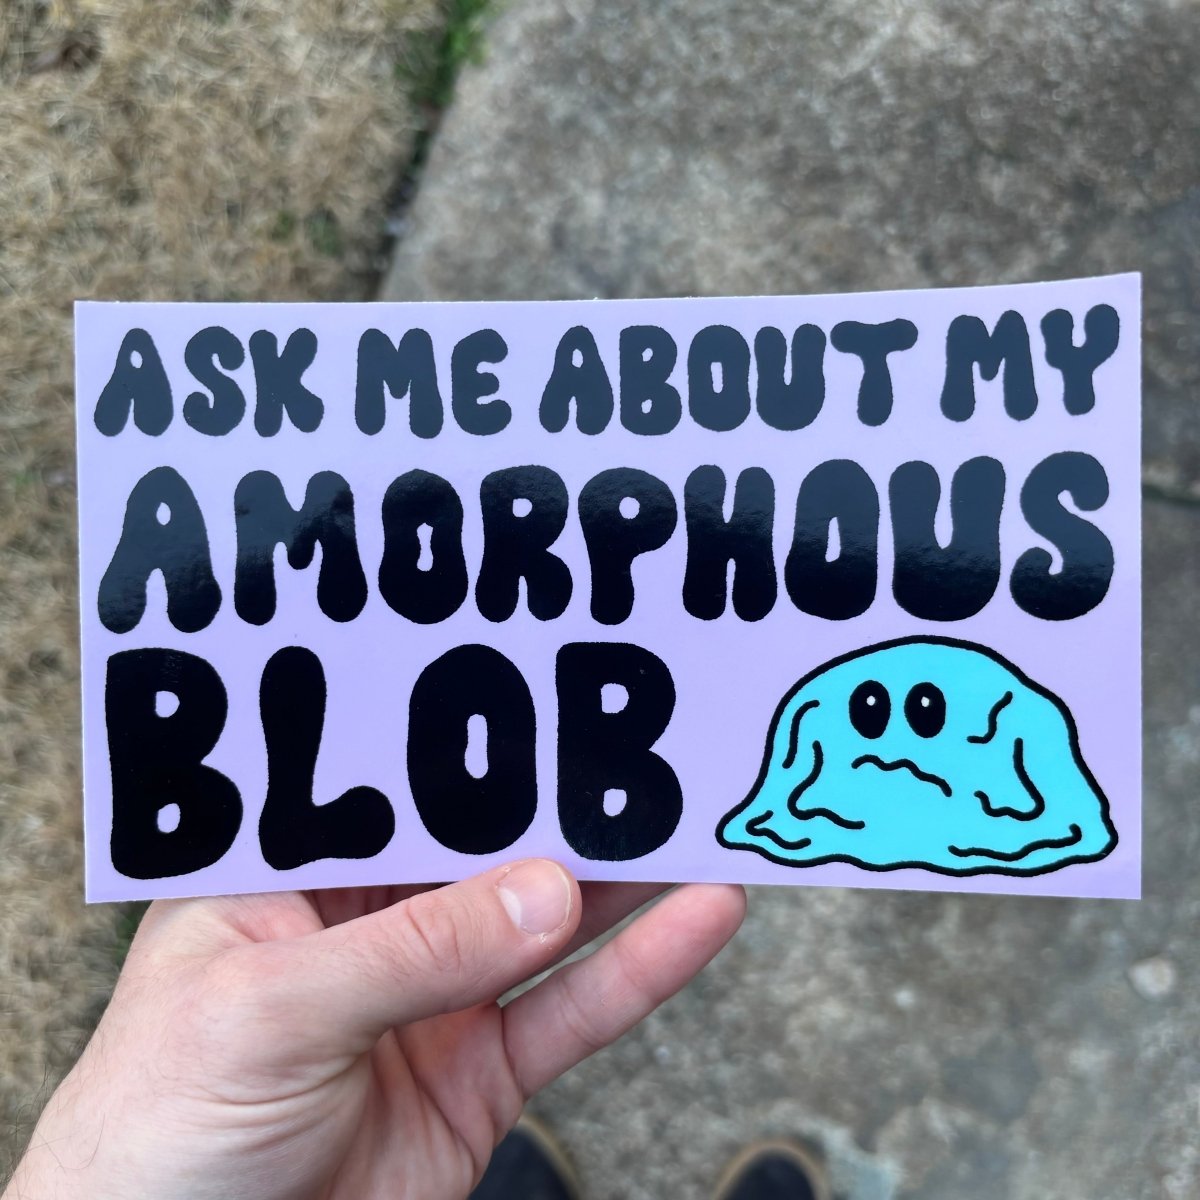 Ask me about my amorphous blob bumper sticker - Sticker - Pretty Bad Co.